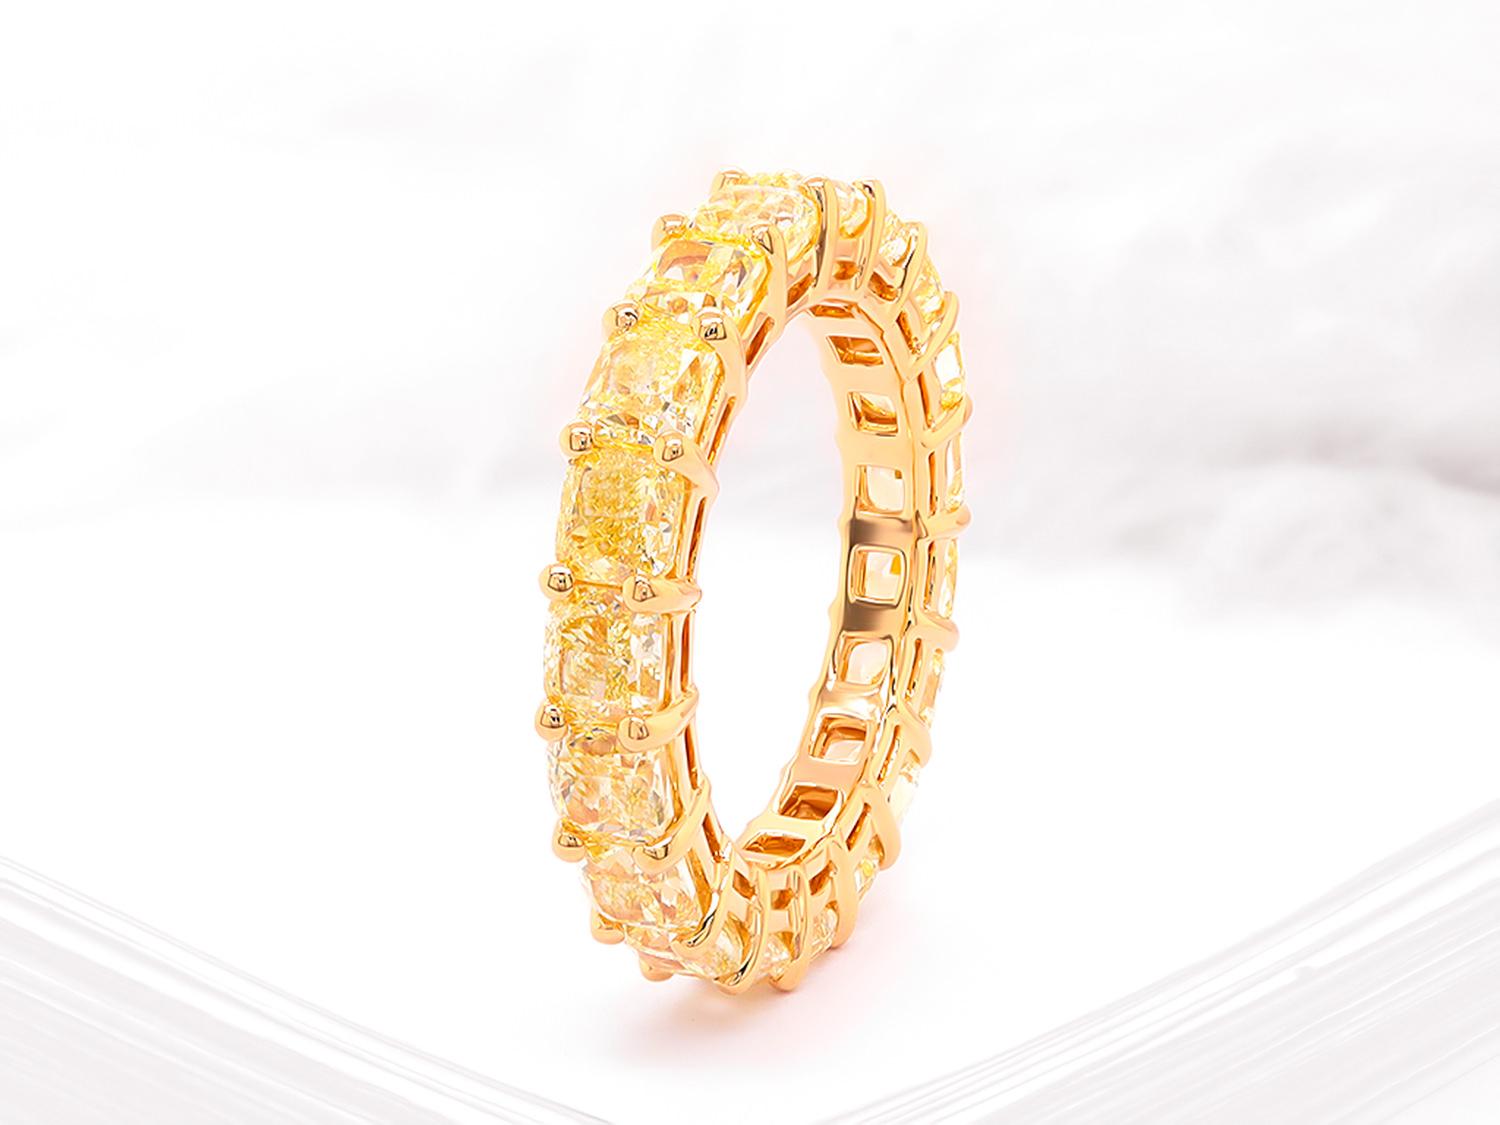 Princess Cut Fancy Yellow Diamond Eternity Band Ring 6.32 Carats 18K Yellow Gold For Sale